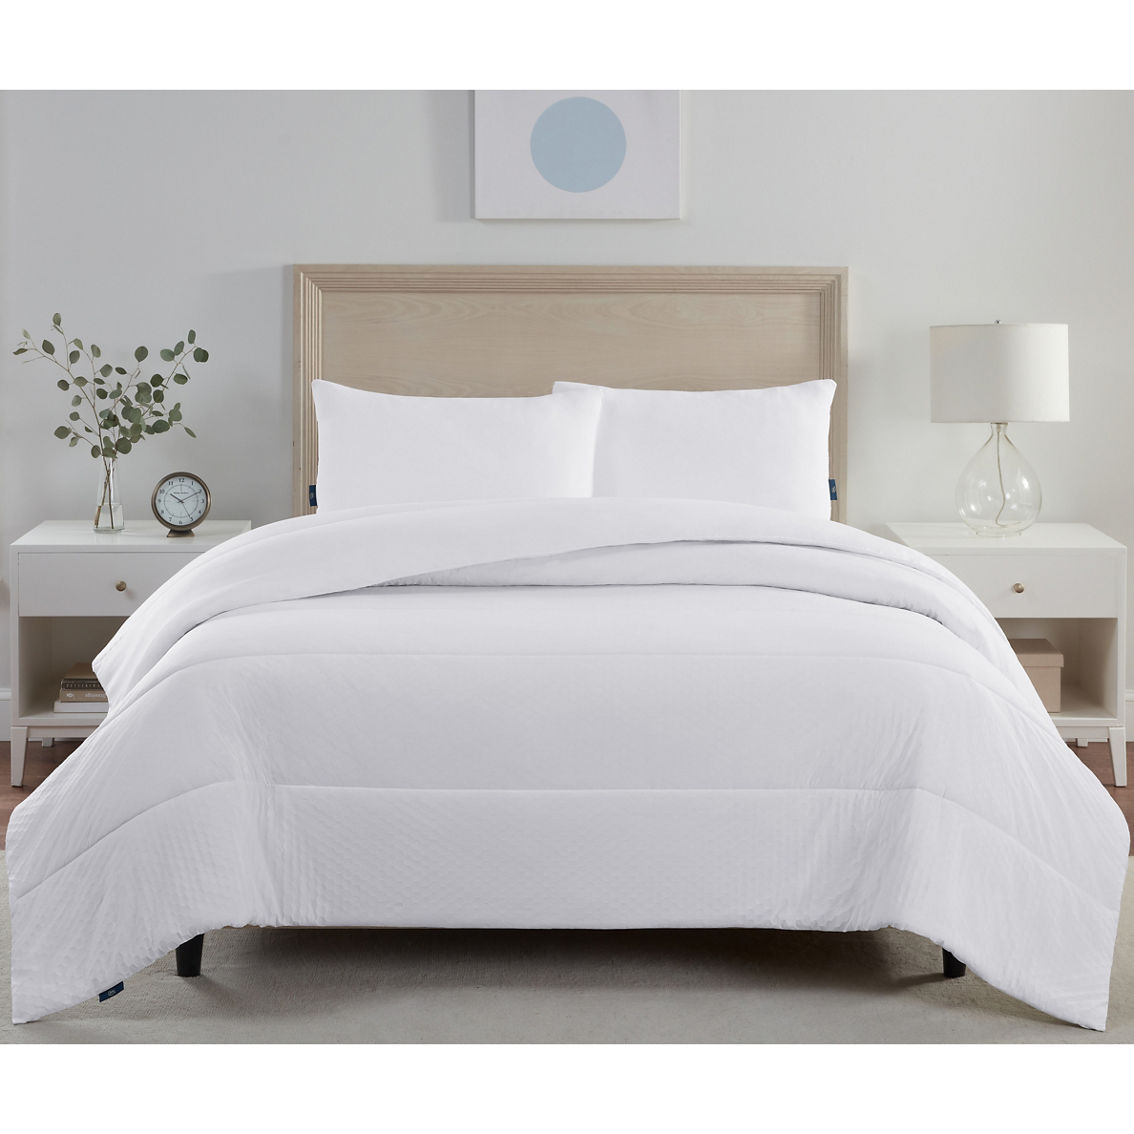 Serta Power Chill Down Alternative Comforter | Comforters & Quilts ...